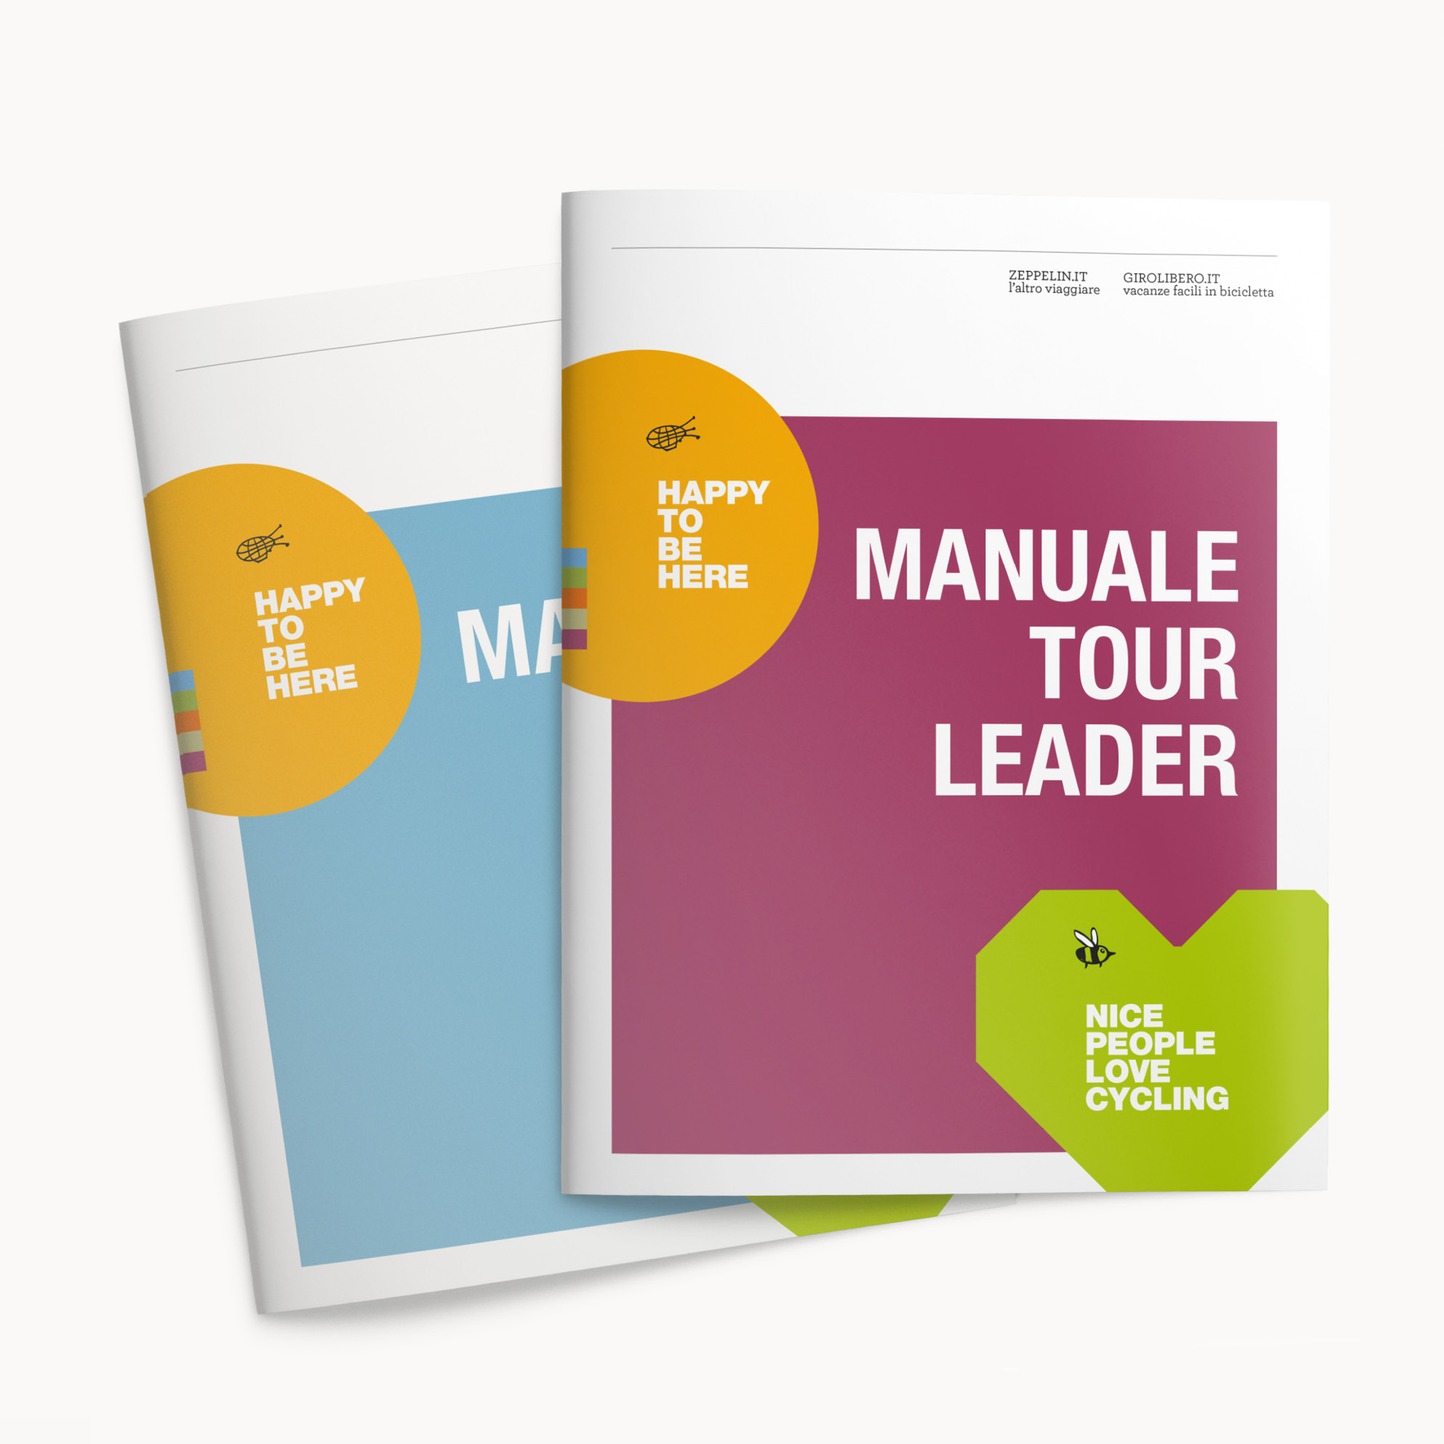 Manuale tour leader / Tour leader handbook